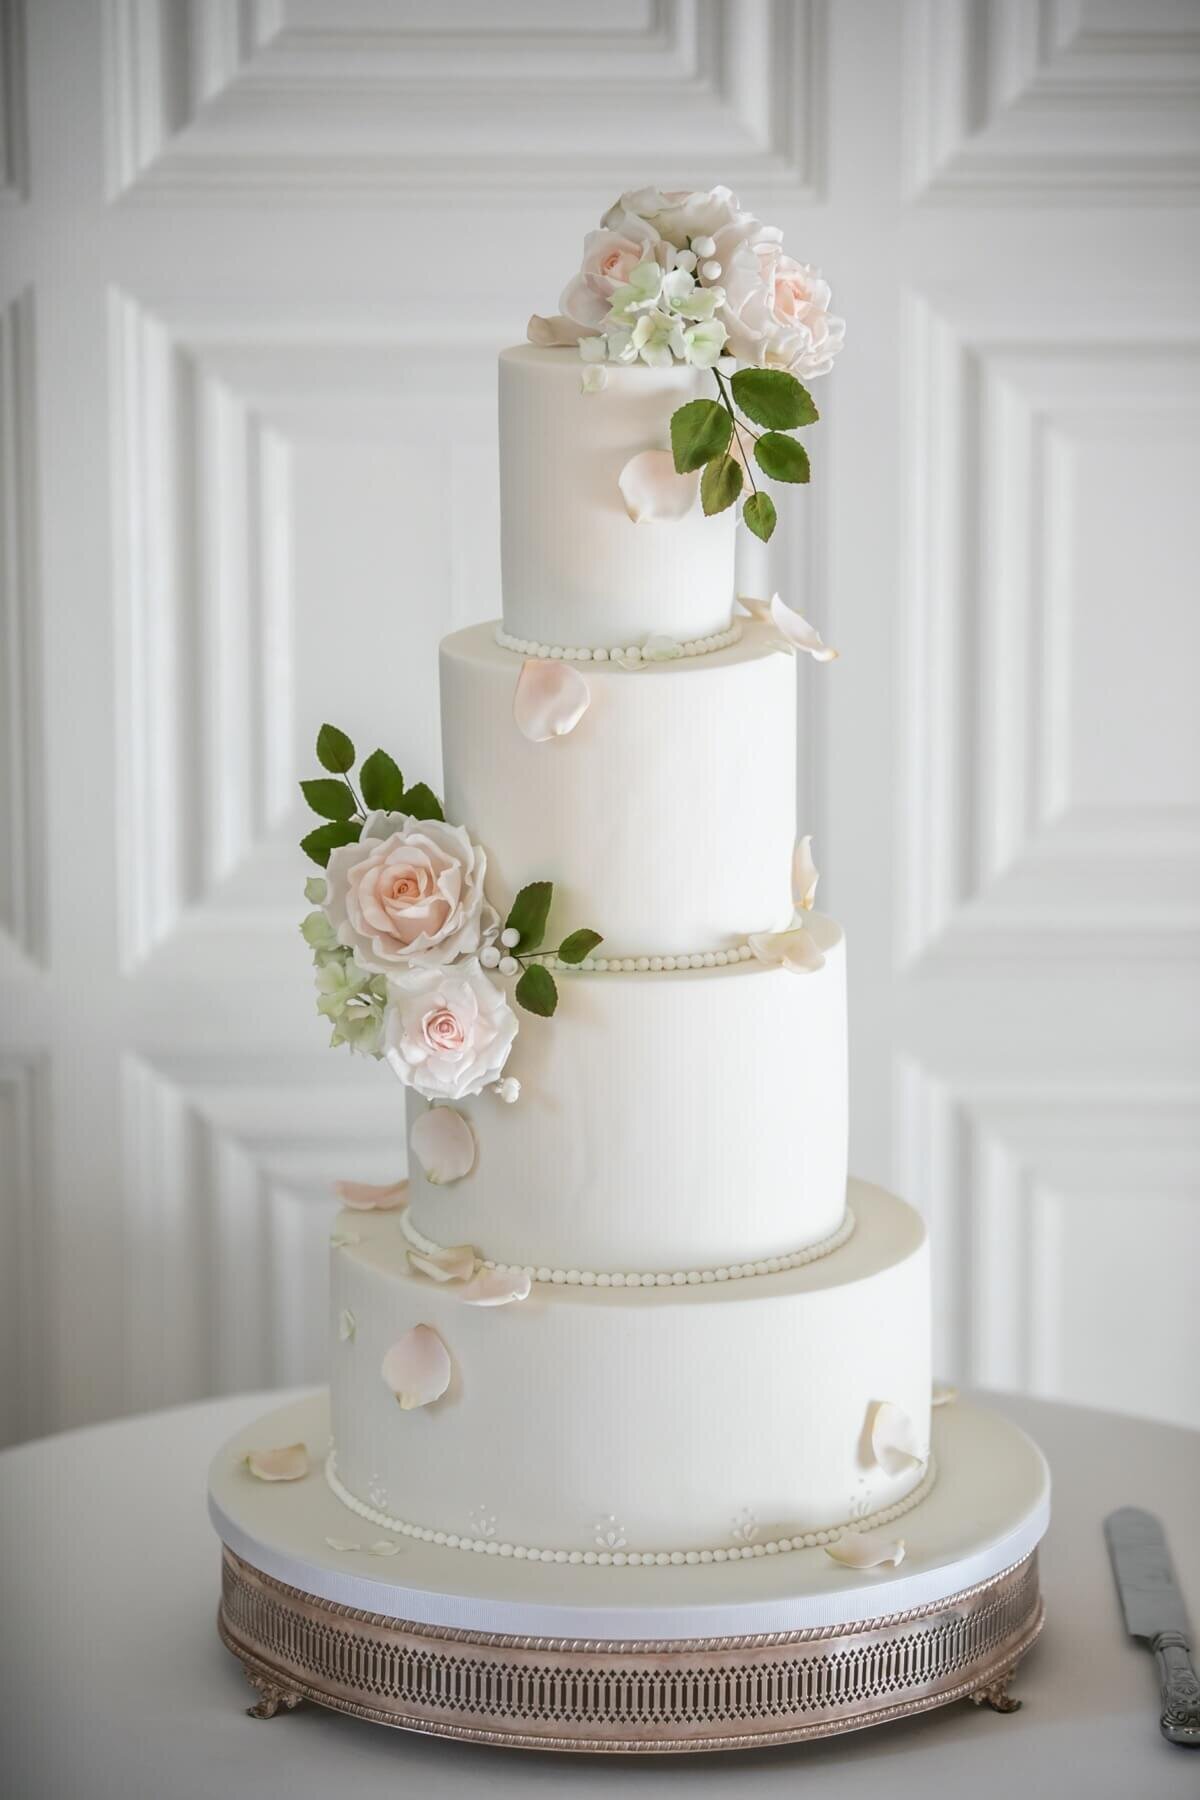 White wedding cake with white sugar flowers, green sugar flower foliage